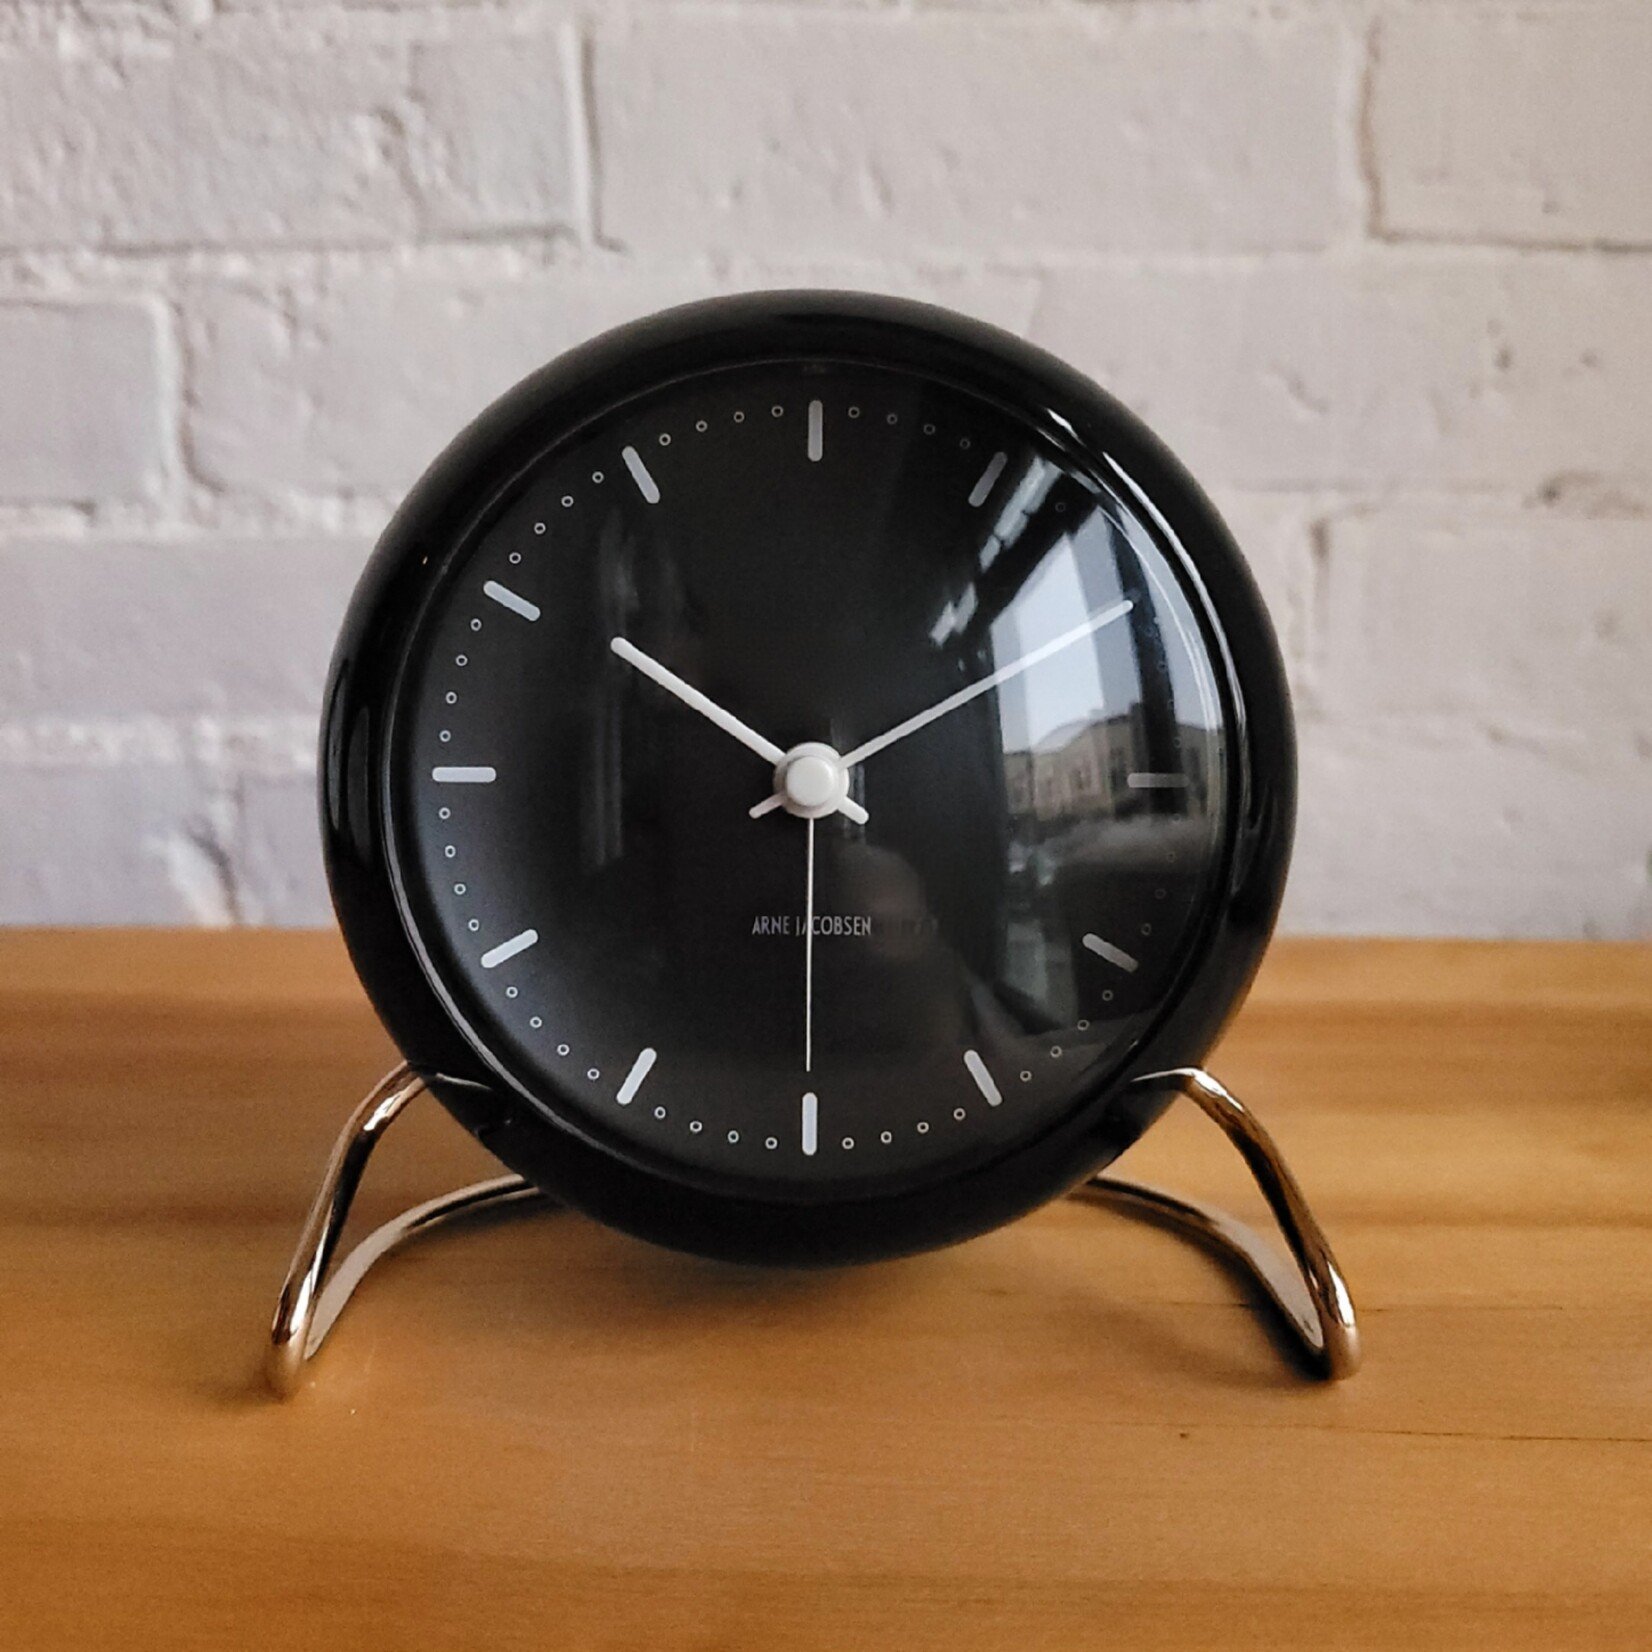 Arne Jacobsen City Hall Table Alarm Clock - black - Black Parrot